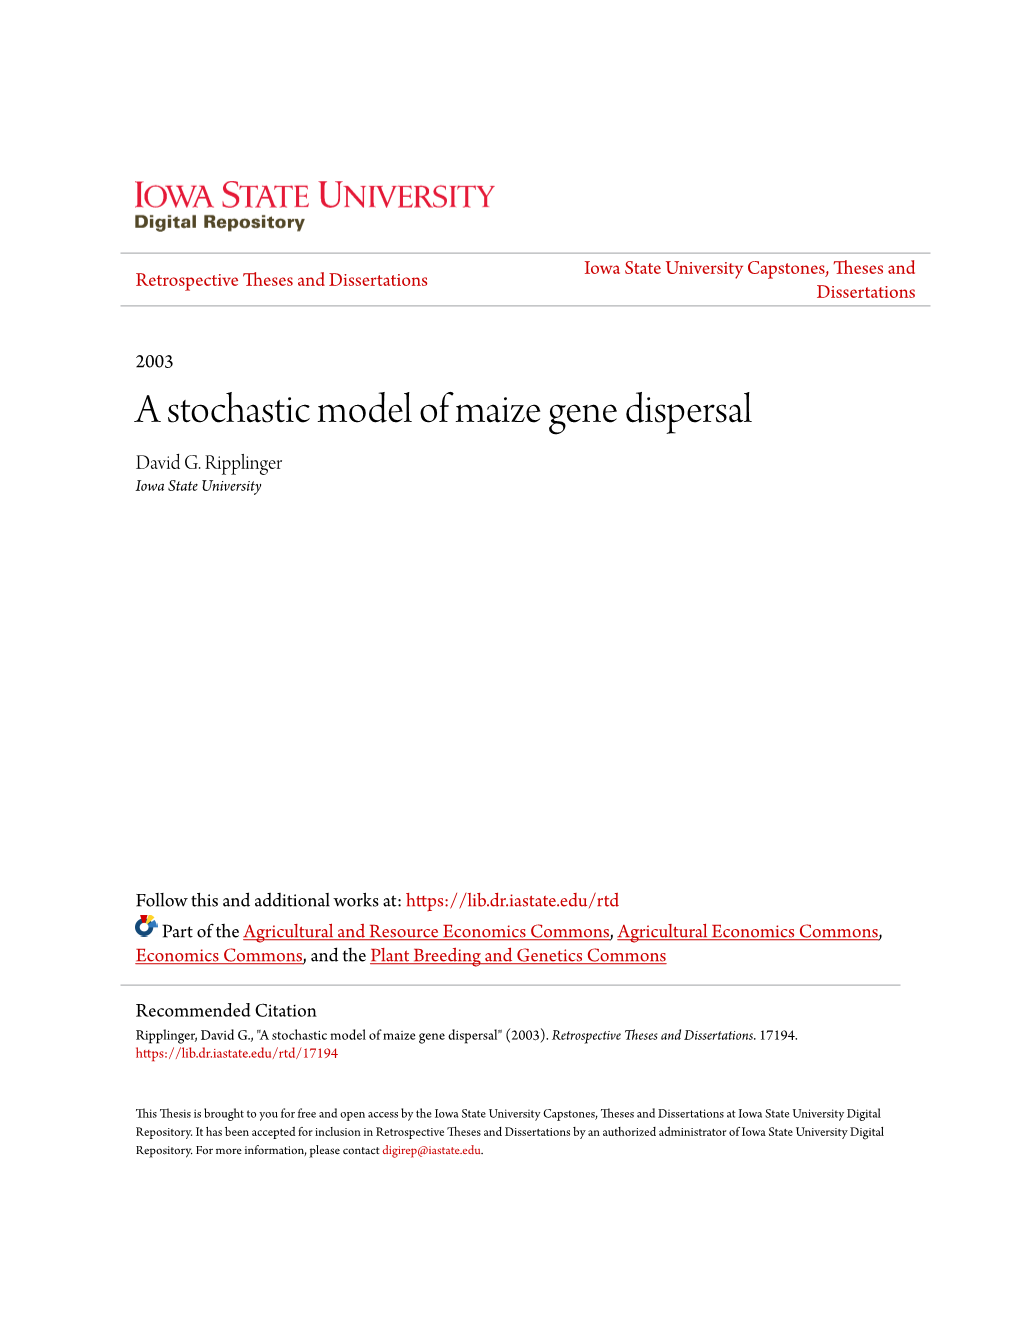 A Stochastic Model of Maize Gene Dispersal David G